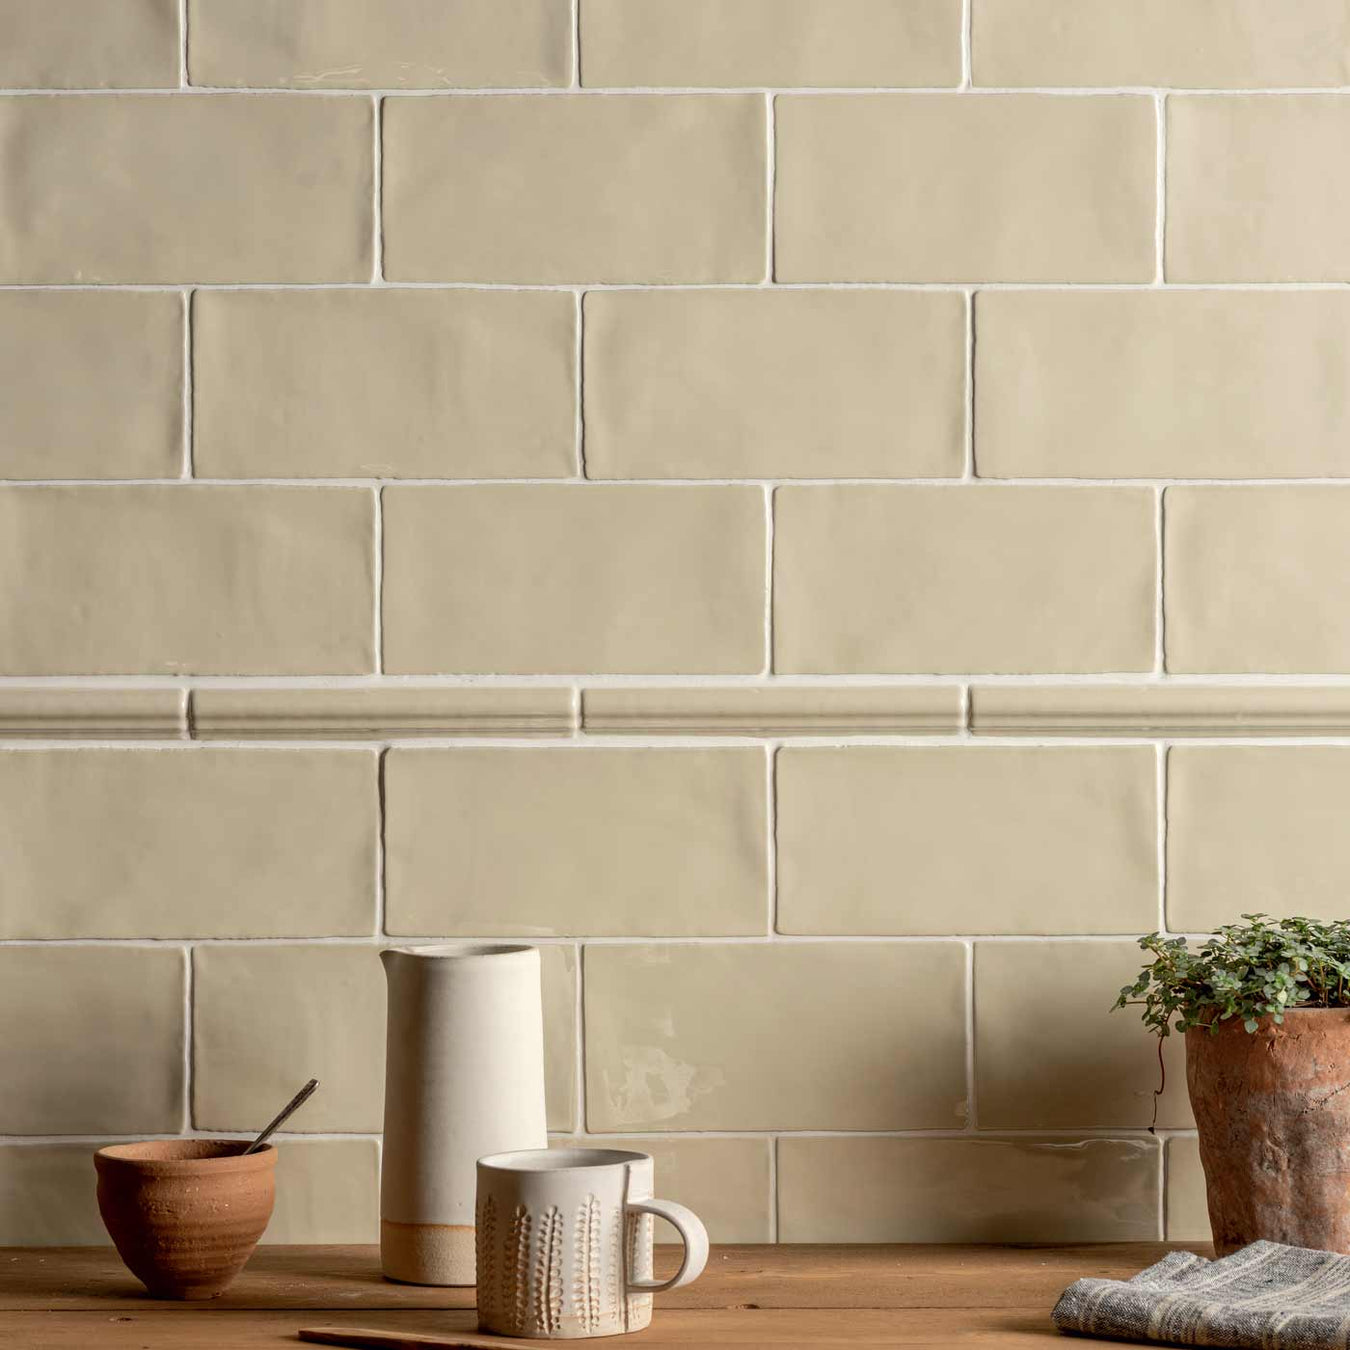 Cream kitchen wall tiles